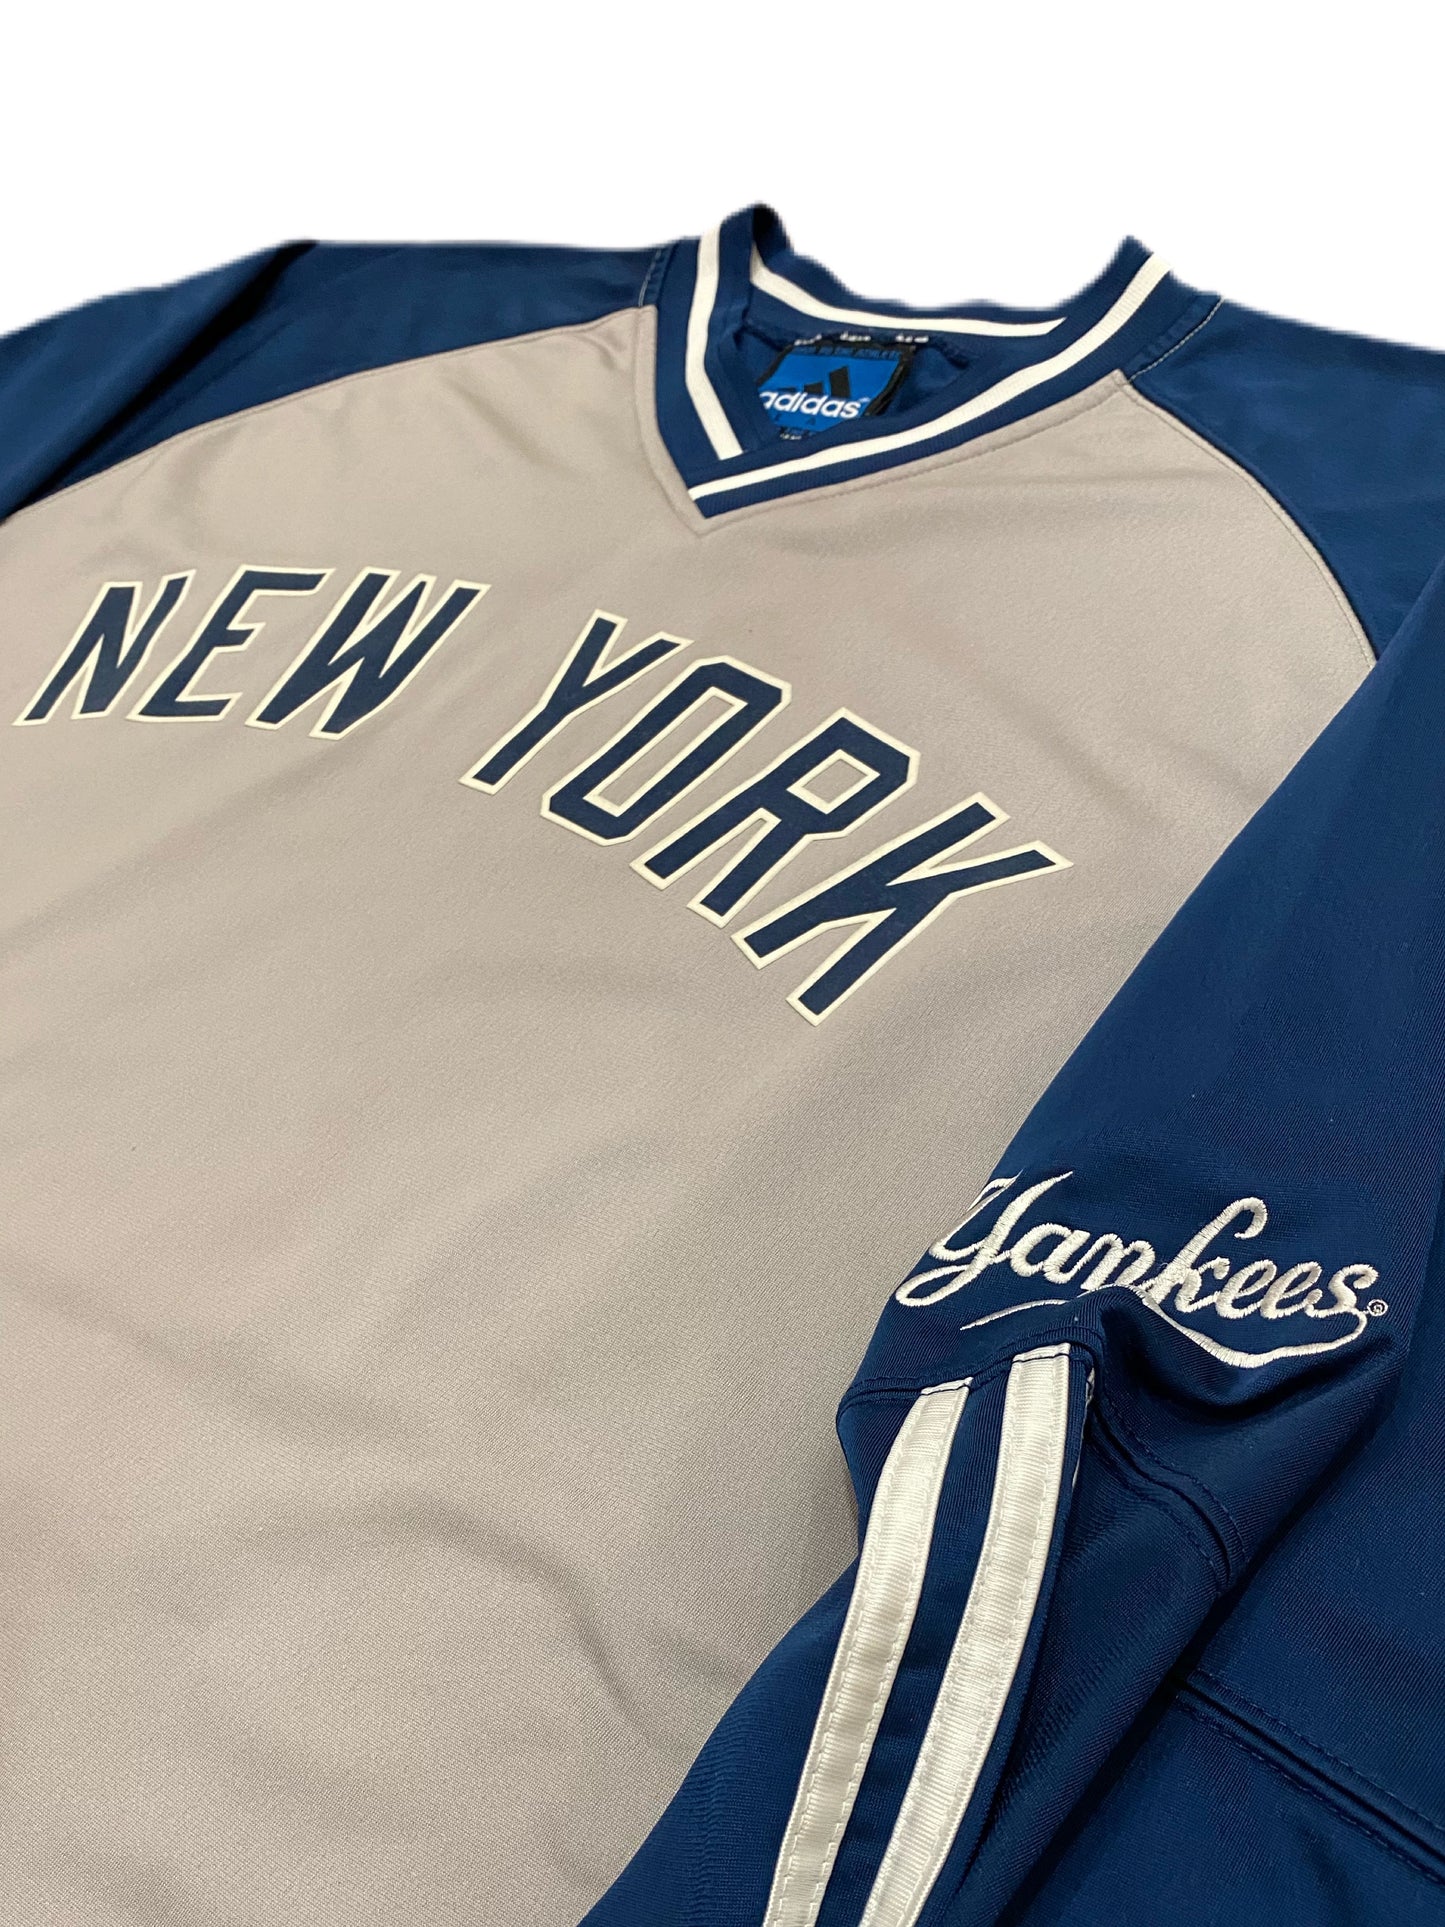 Adidas 90s New York Yankees shirt (XL)